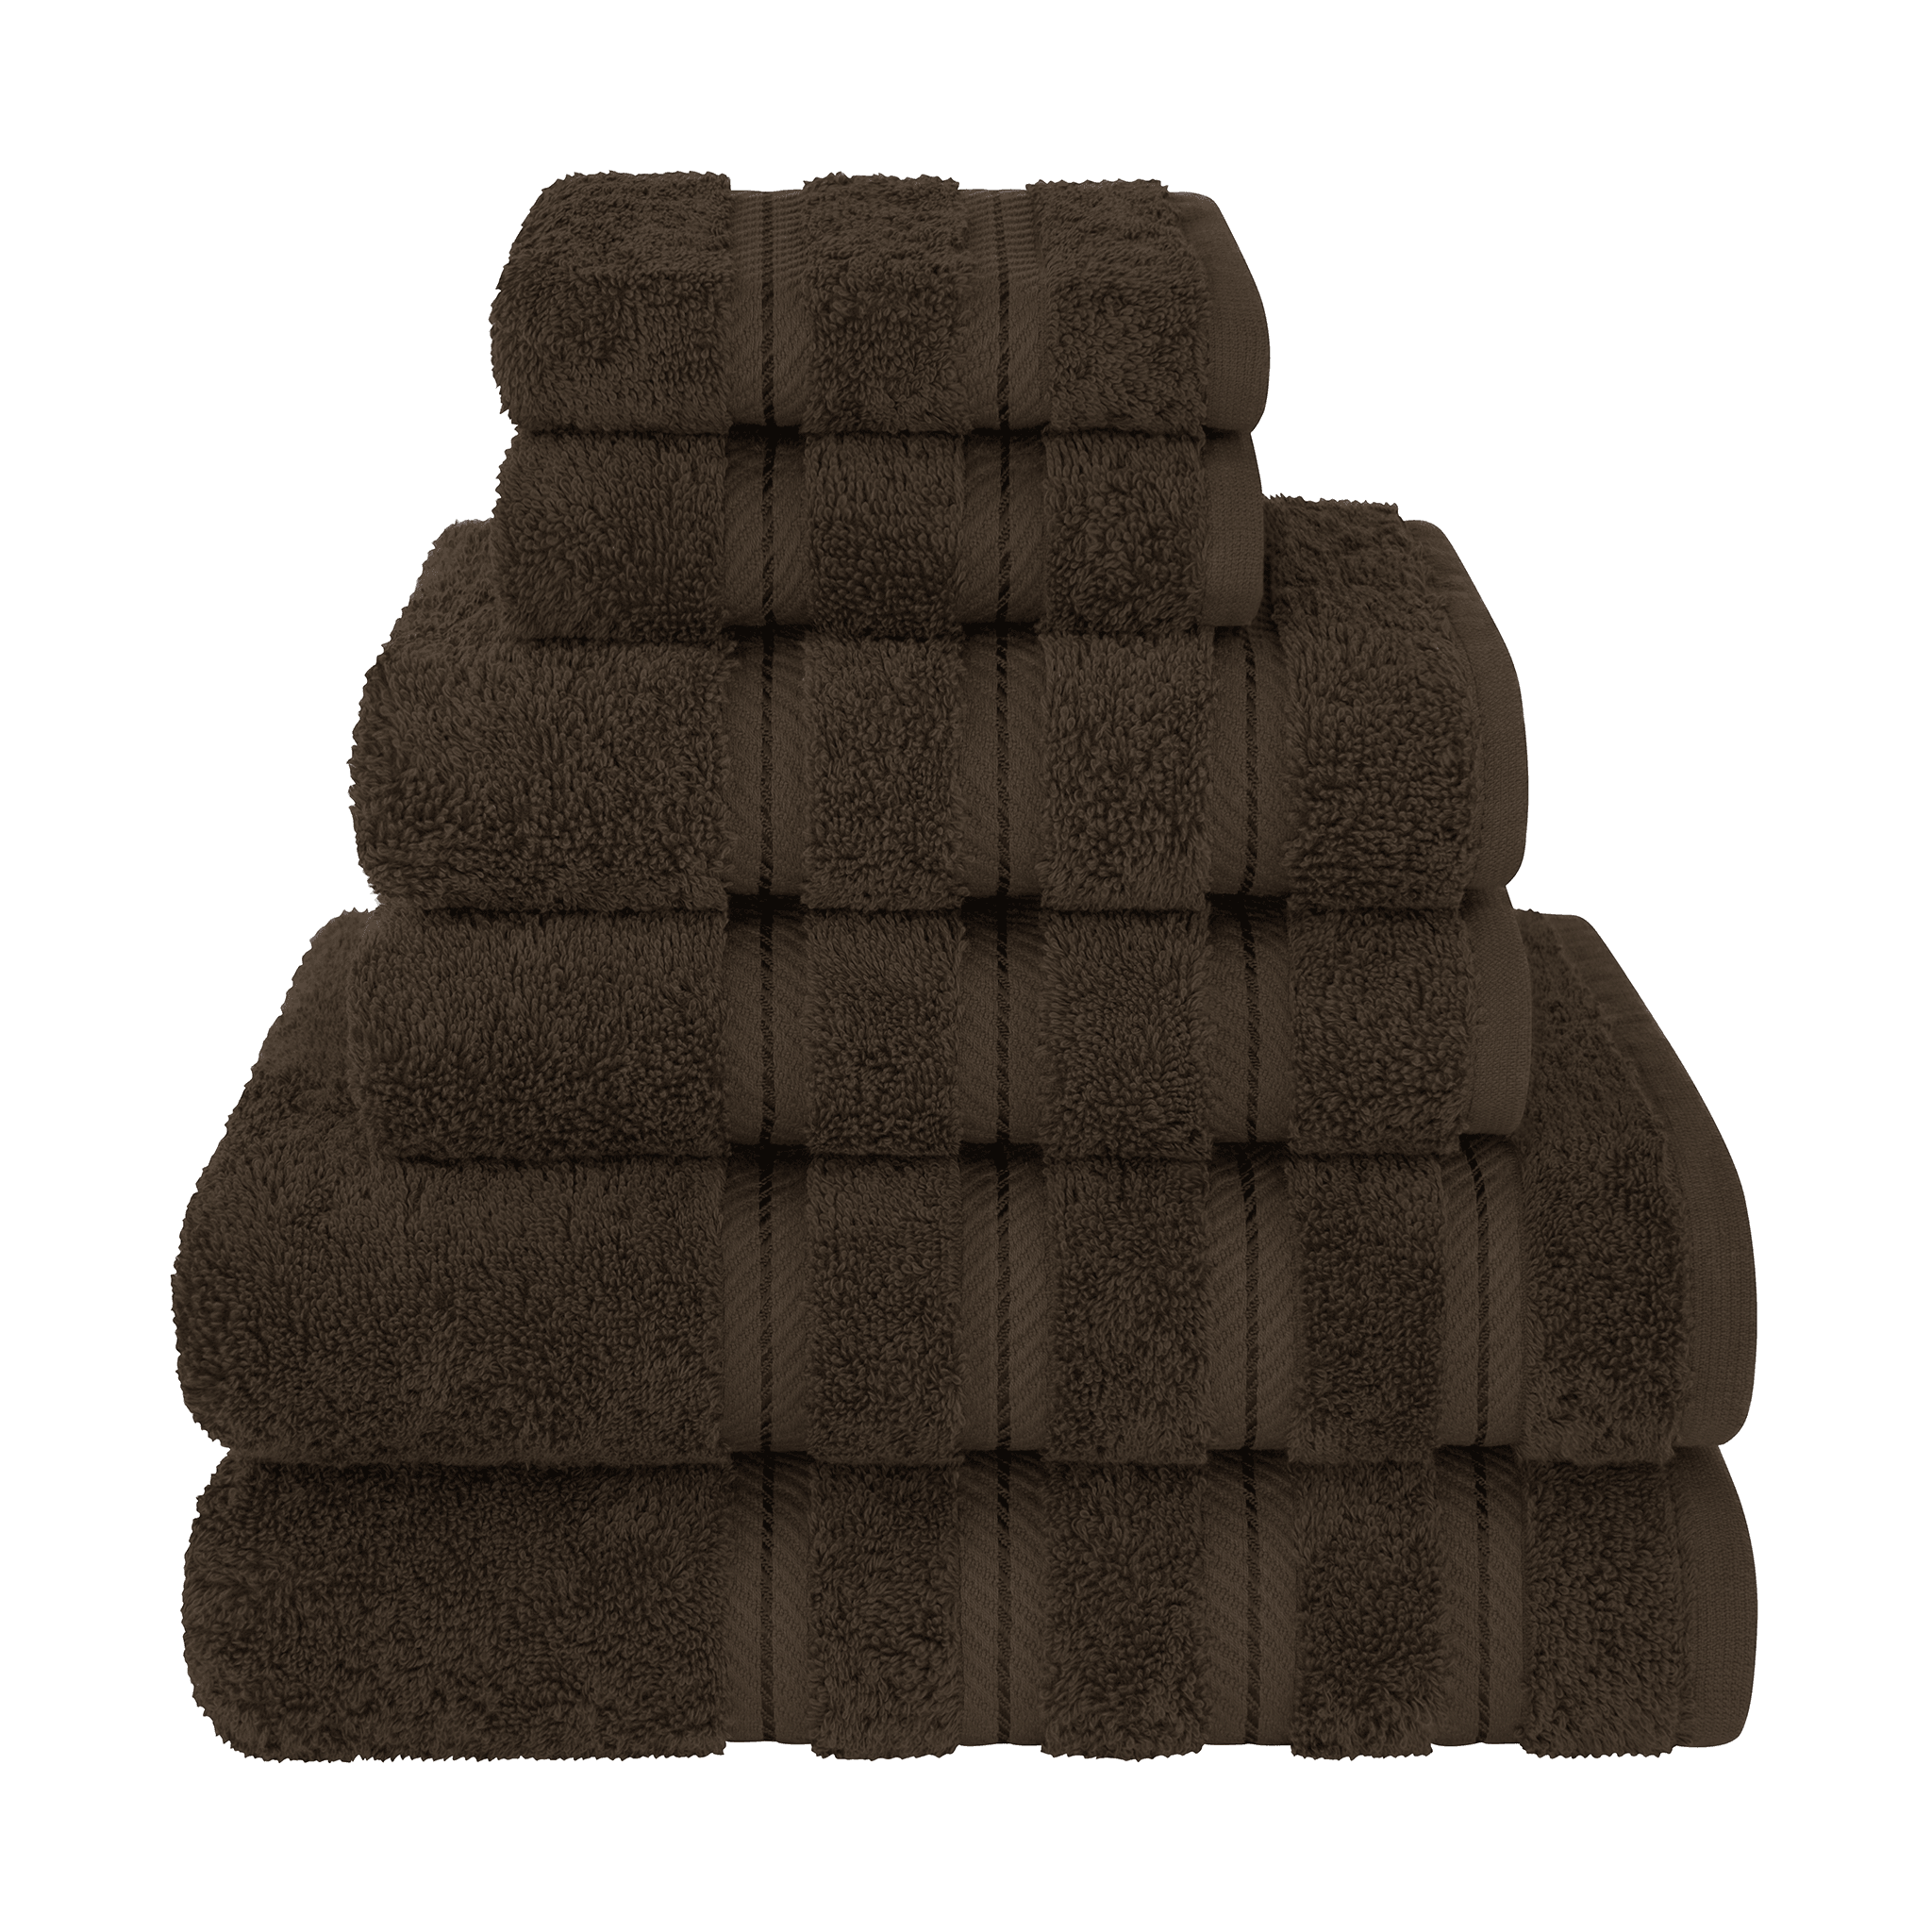 American Soft Linen 100% Turkish Cotton 6 Piece Towel Set - Brown